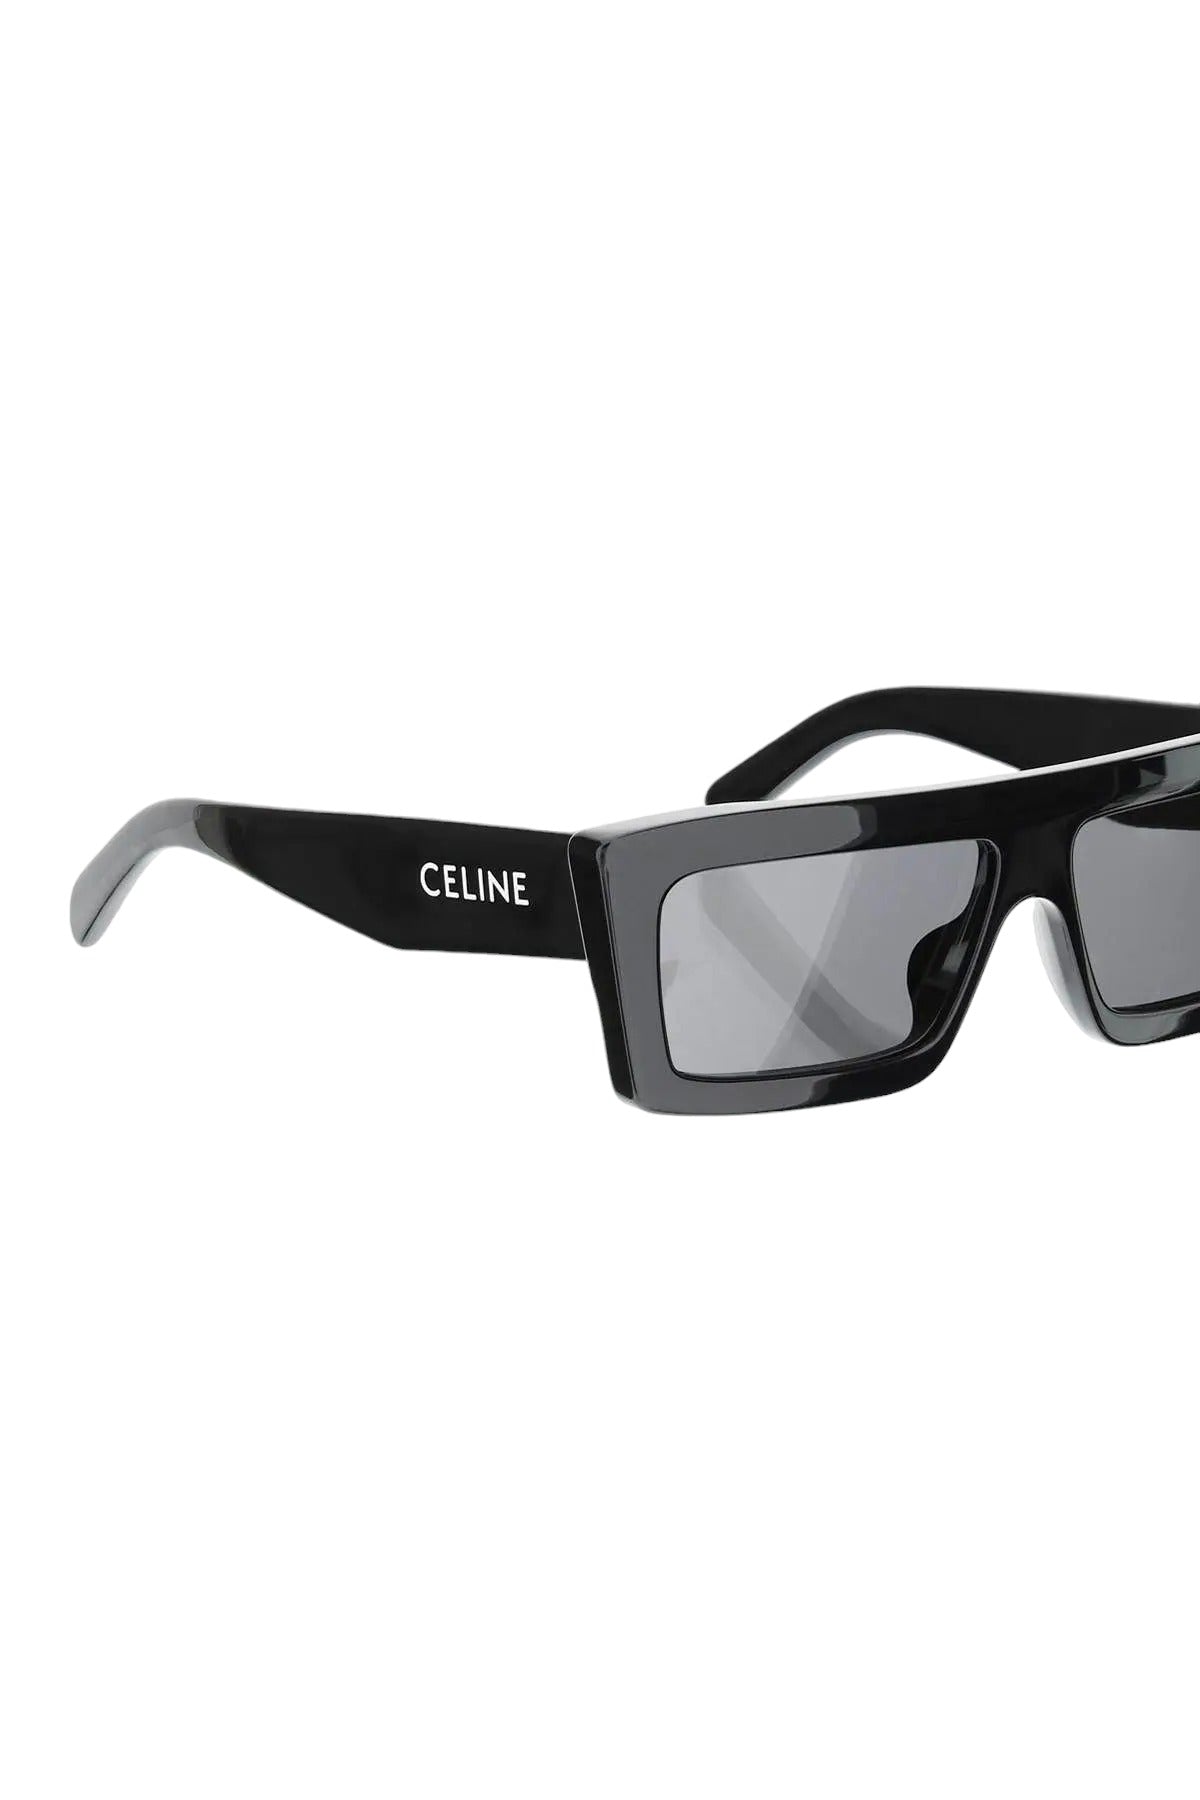 Celine Monochroms 02 Sunglasses